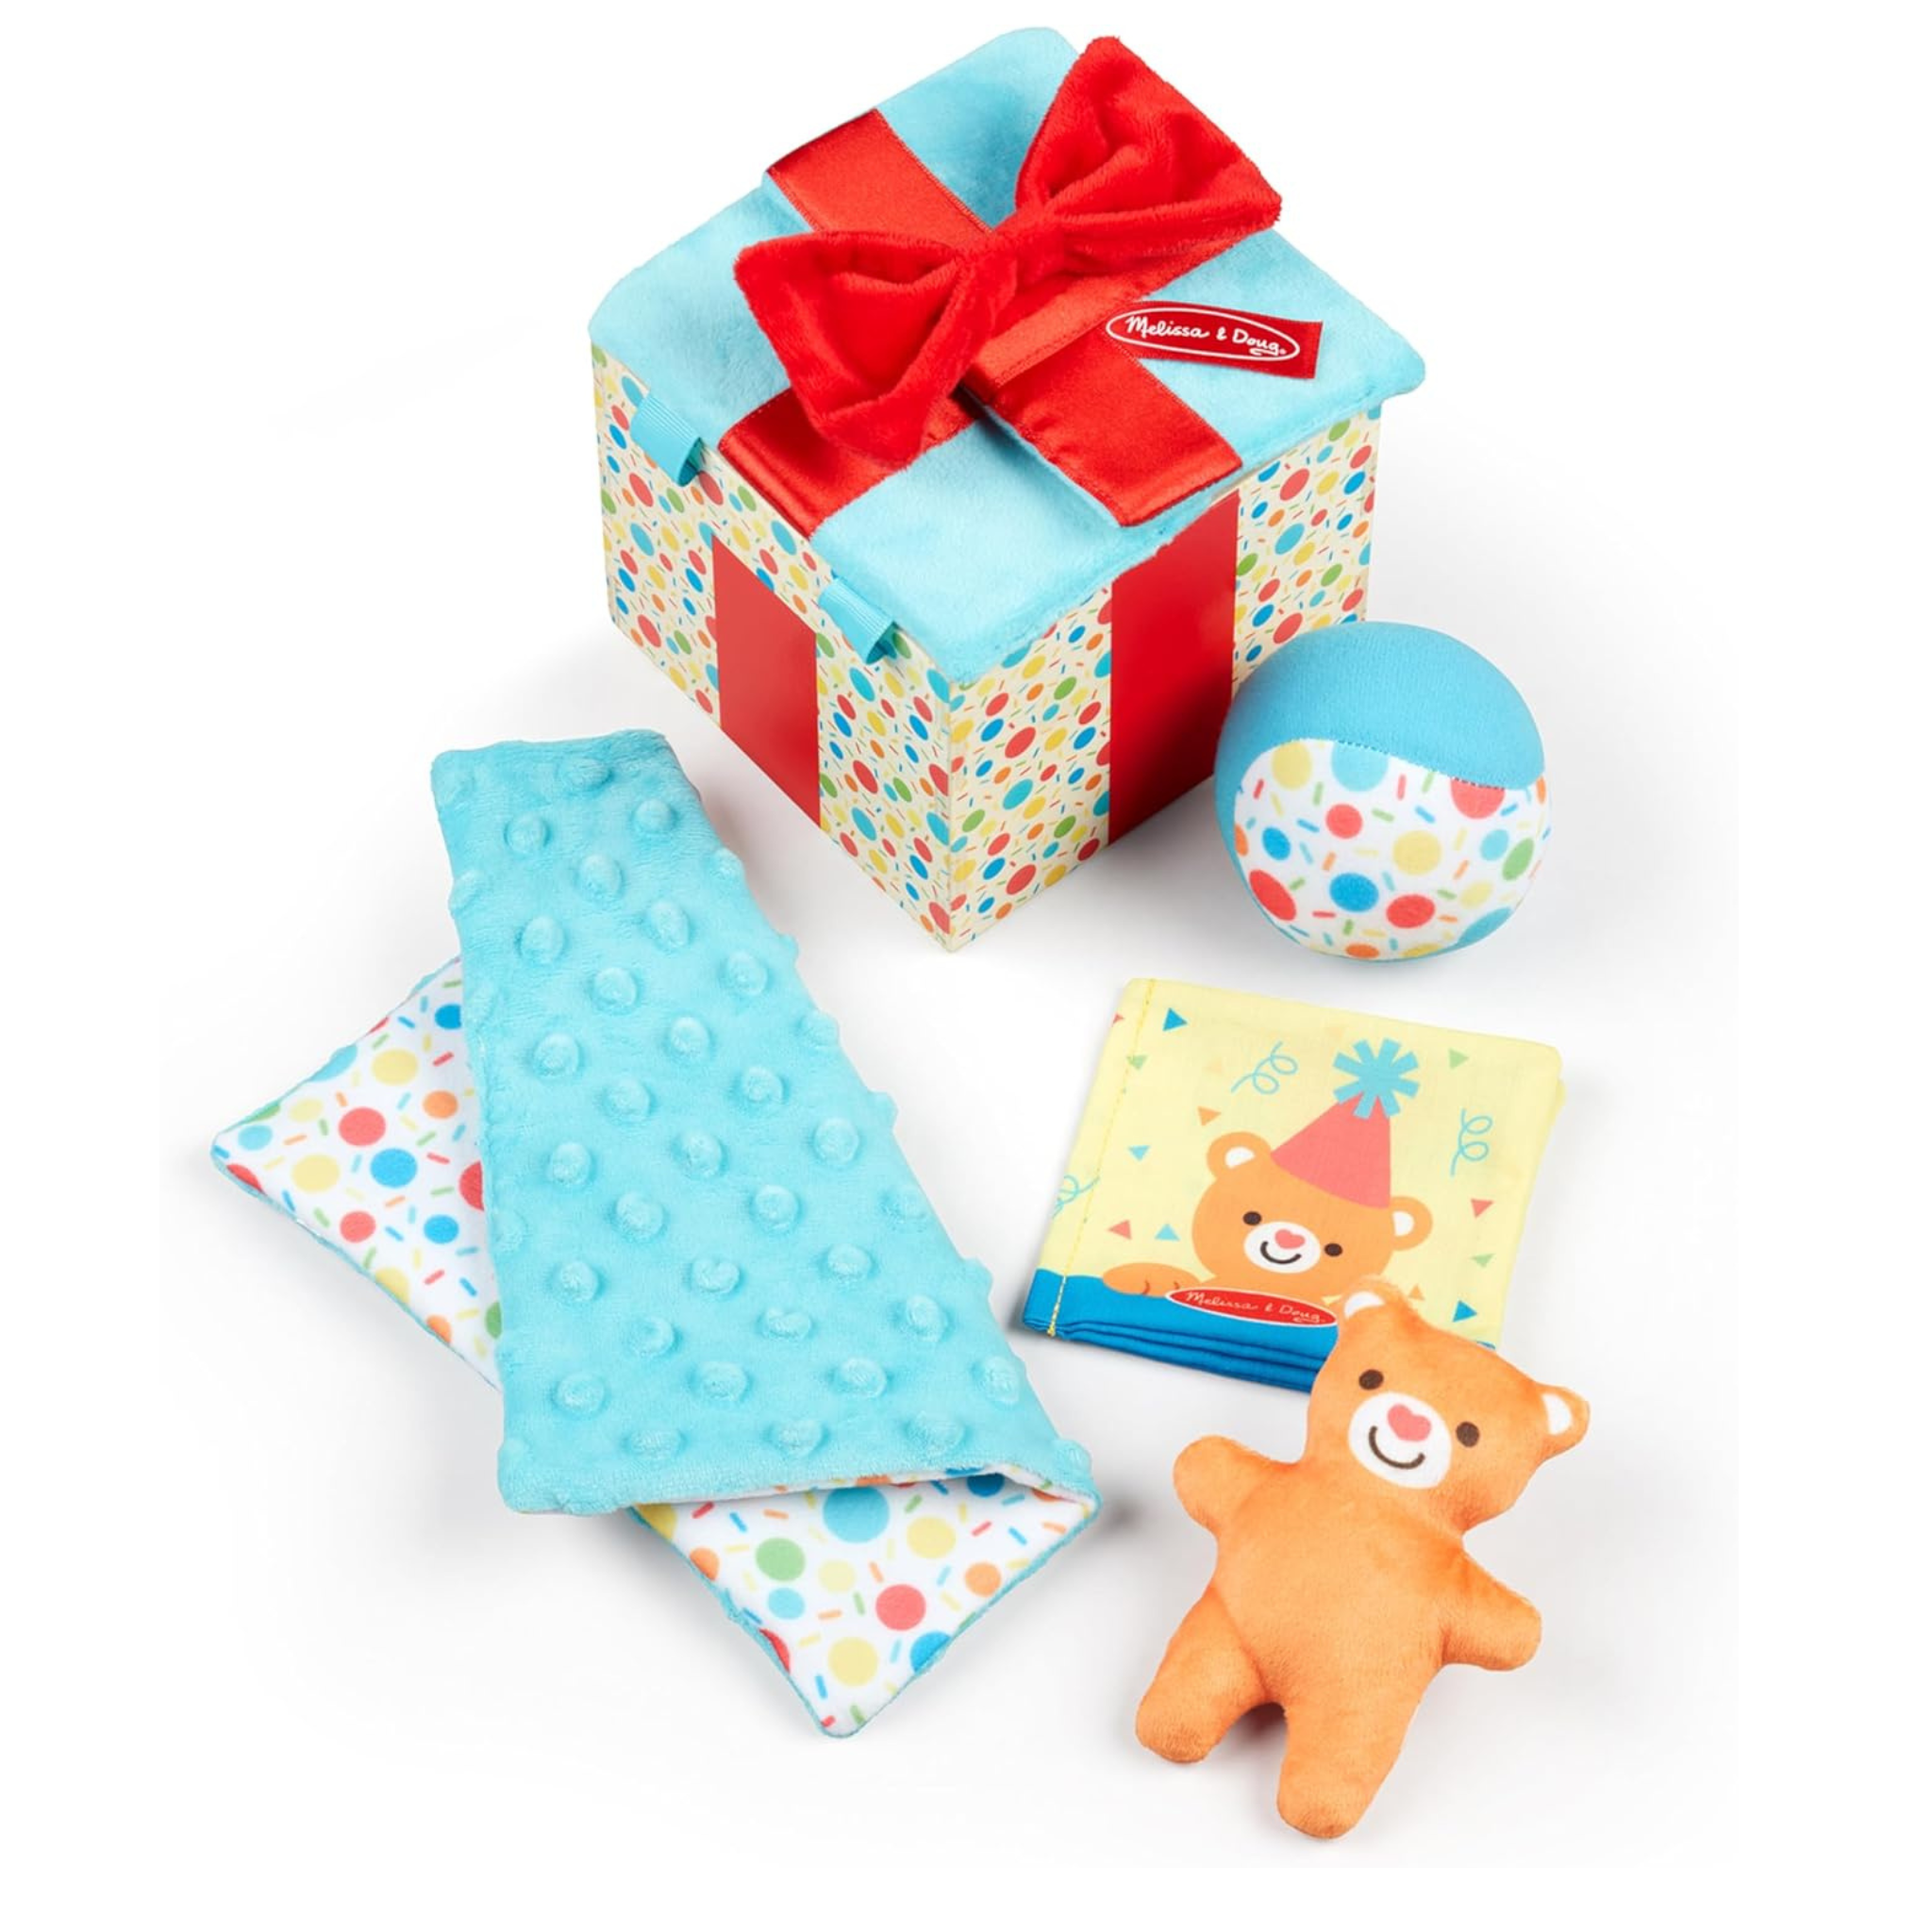 5-Piece Melissa & Doug Infant Toy Wooden Gift Box